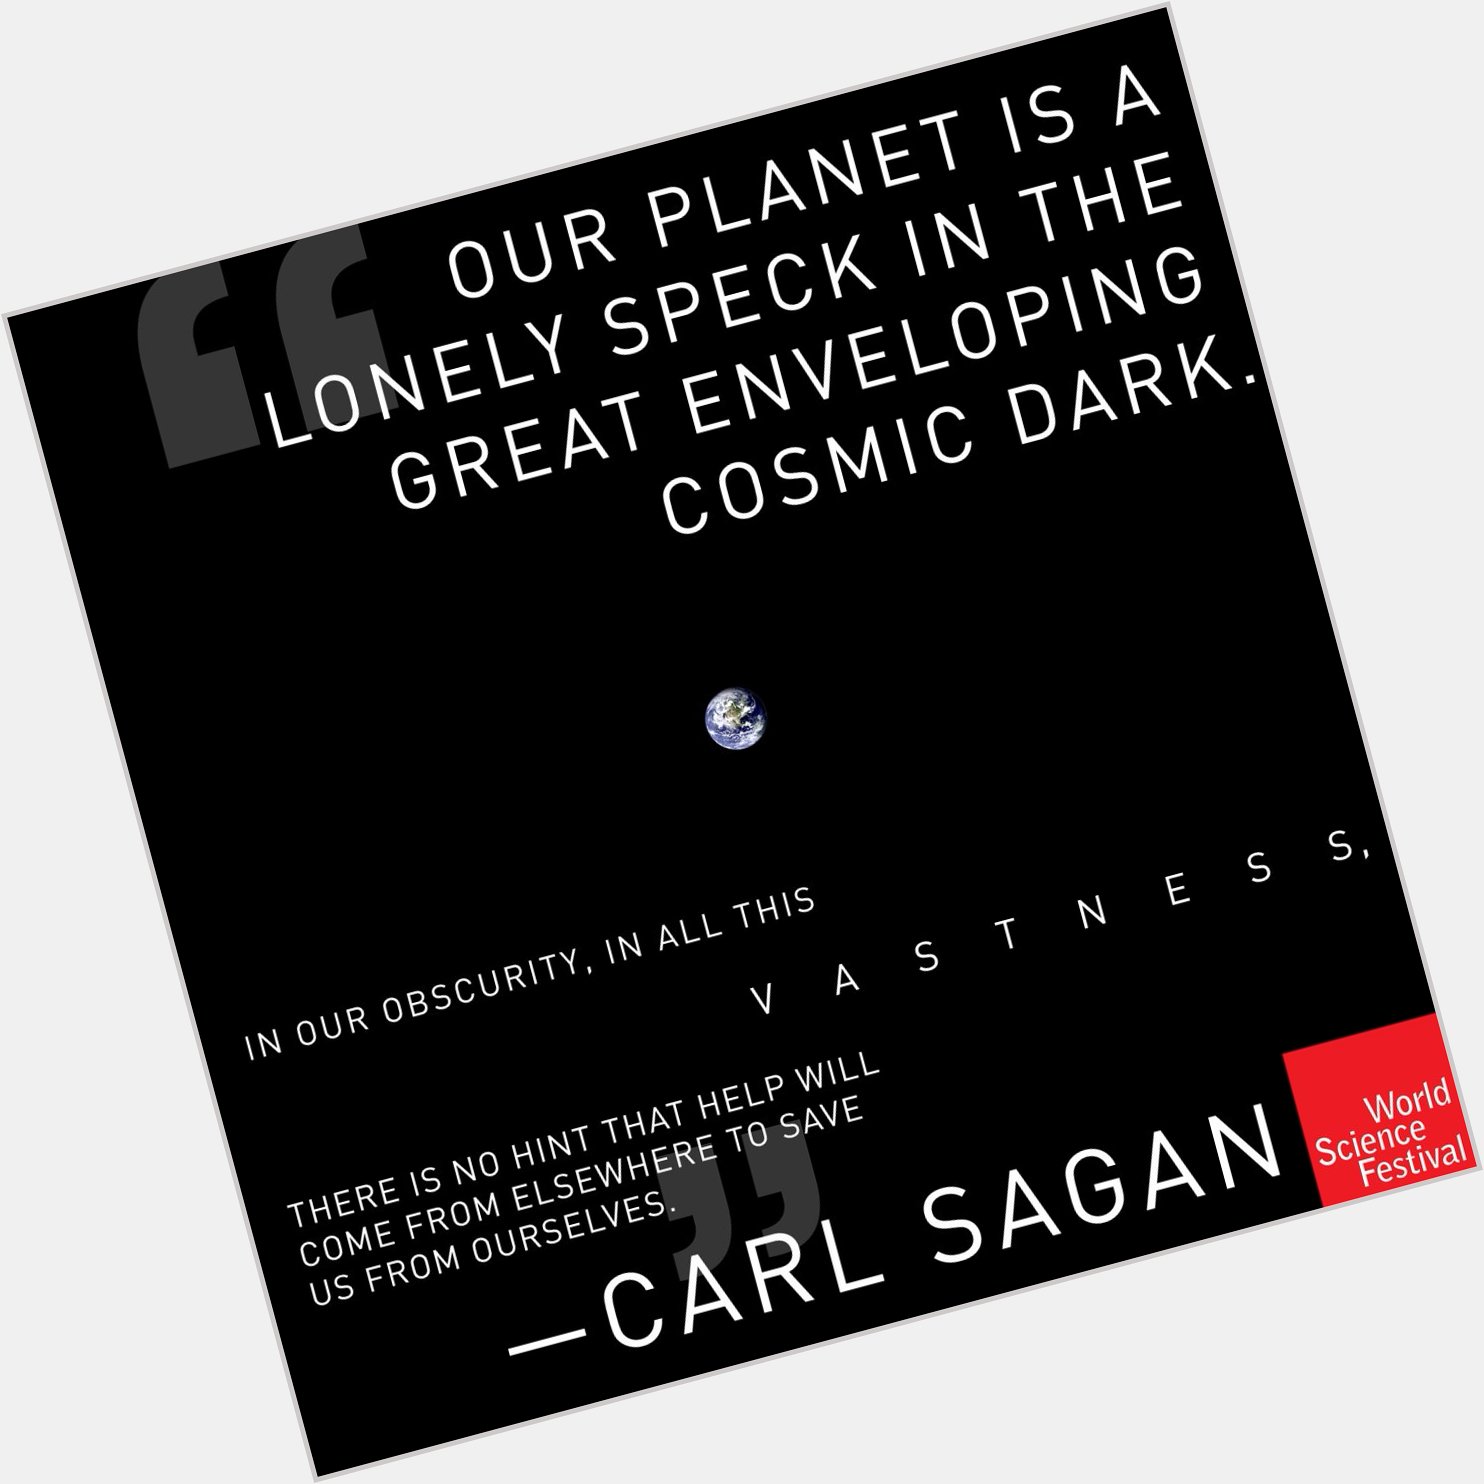 Happy Birthday to the great Carl Sagan. 